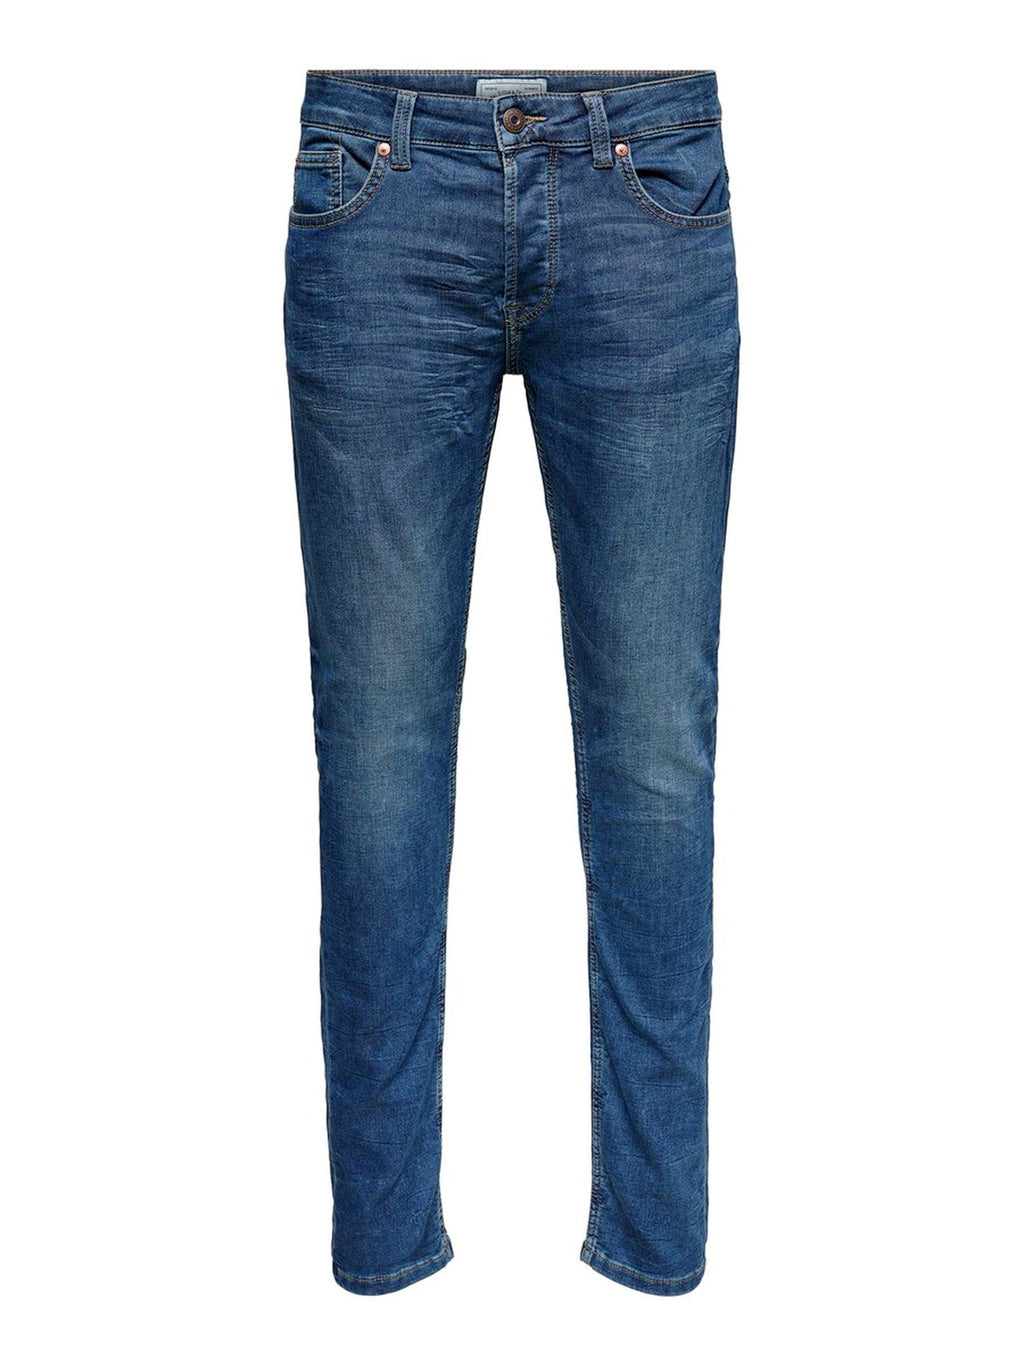 Jeans STRINGLE - Denim azul